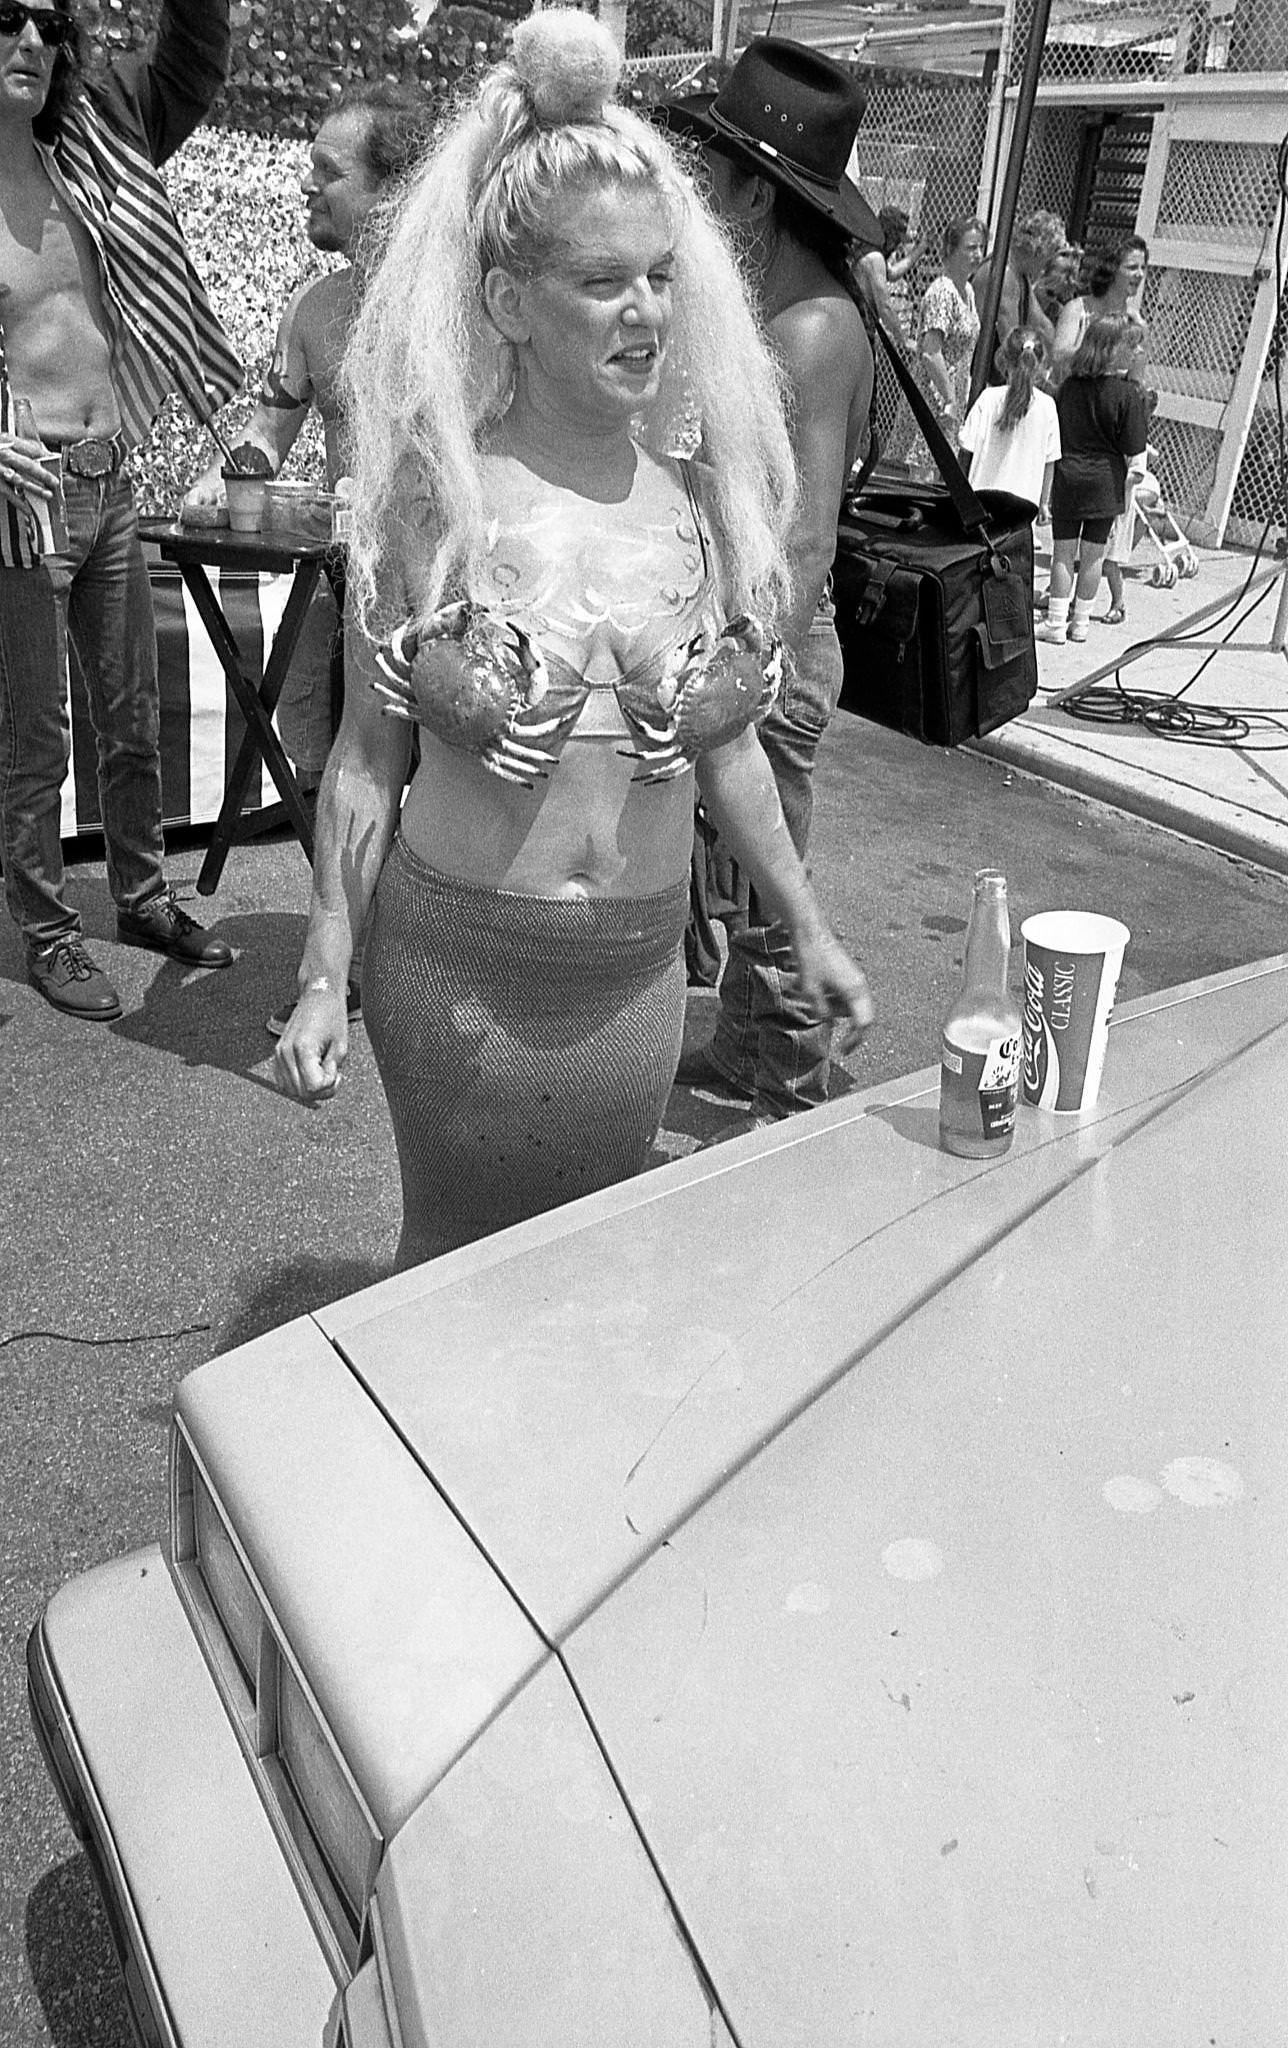 Woman In Mermaid Costume Poses At Coney Island Mermaid Parade, 1997